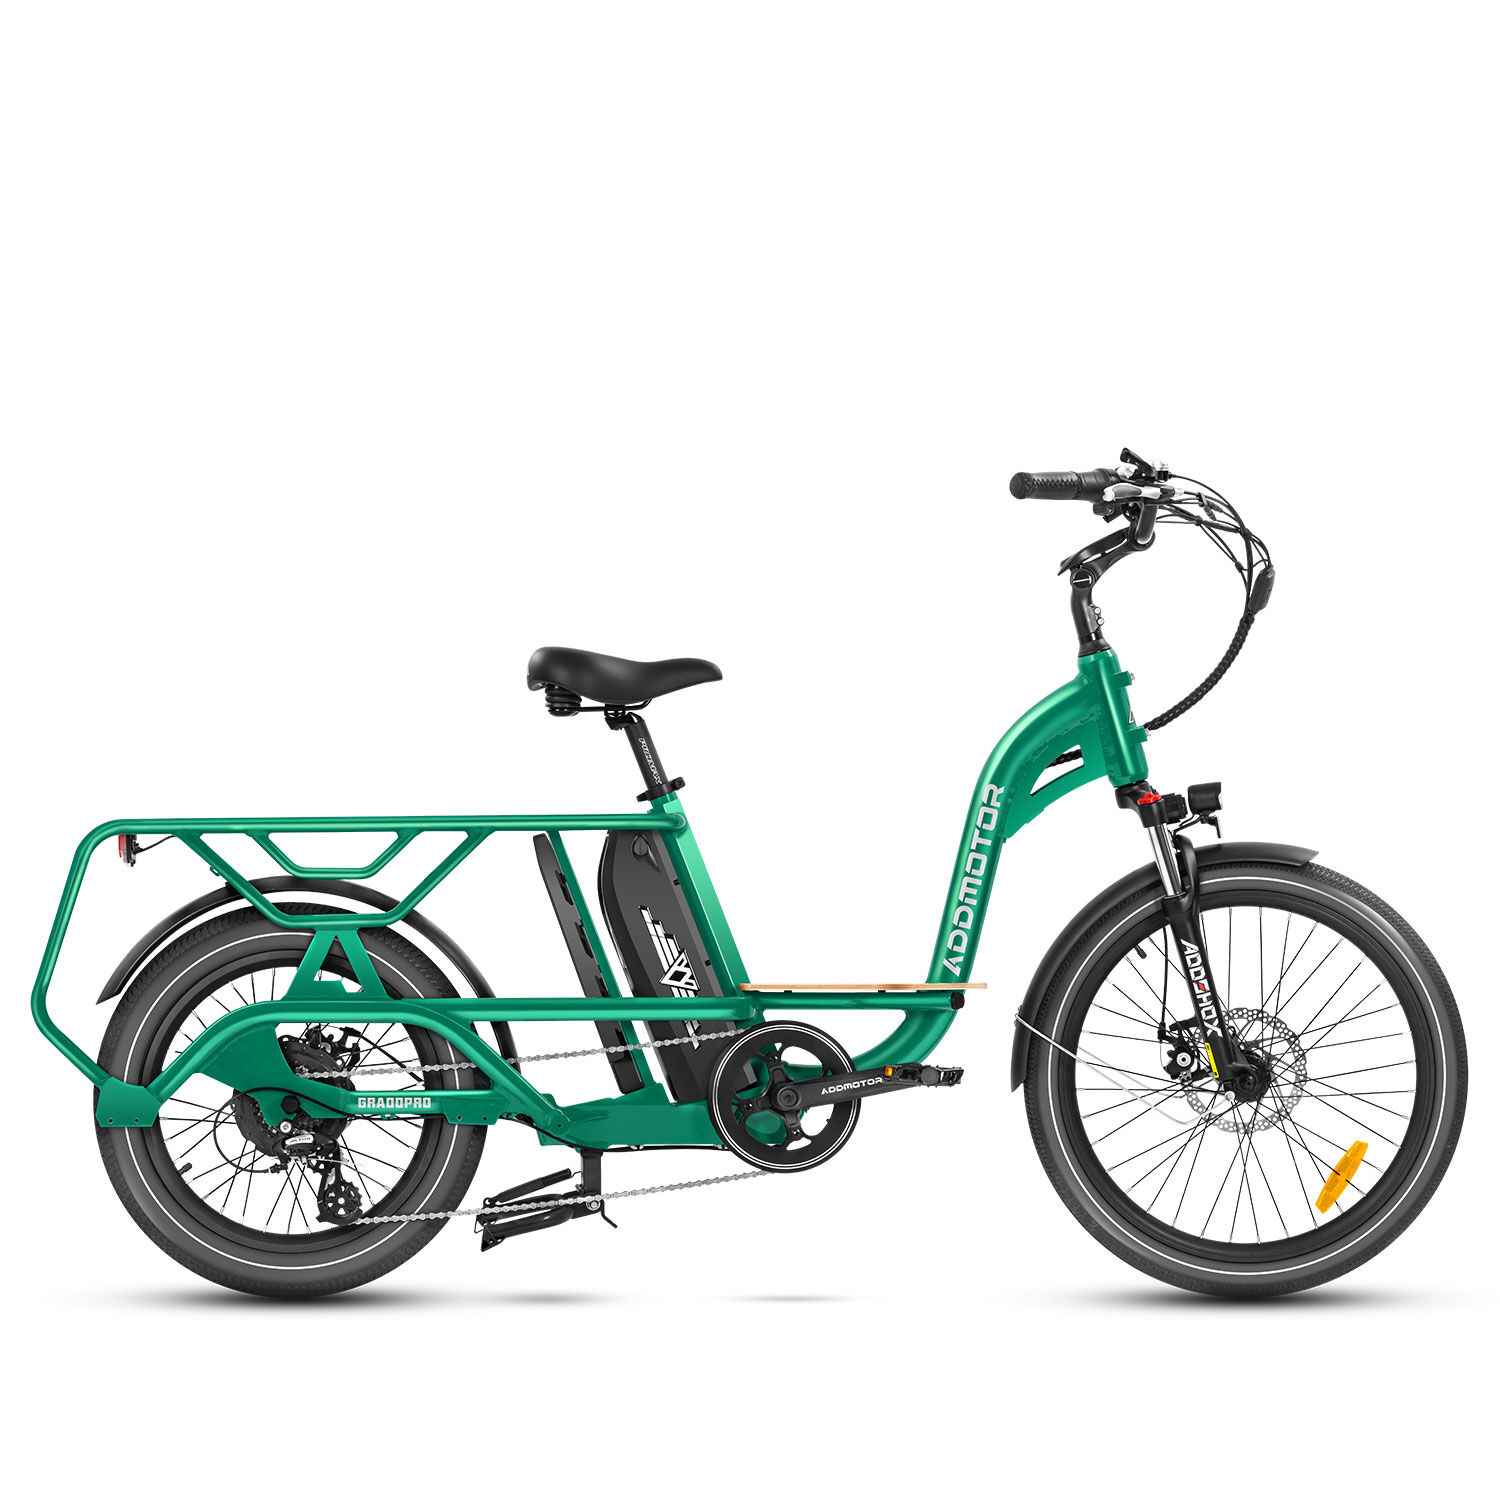 Addmotor Graoopro Electric Bike   Best Dual Battery Cargo Electric Bicycle   Adults 750W Rear Motor Ebikes   Green + Single-Battery